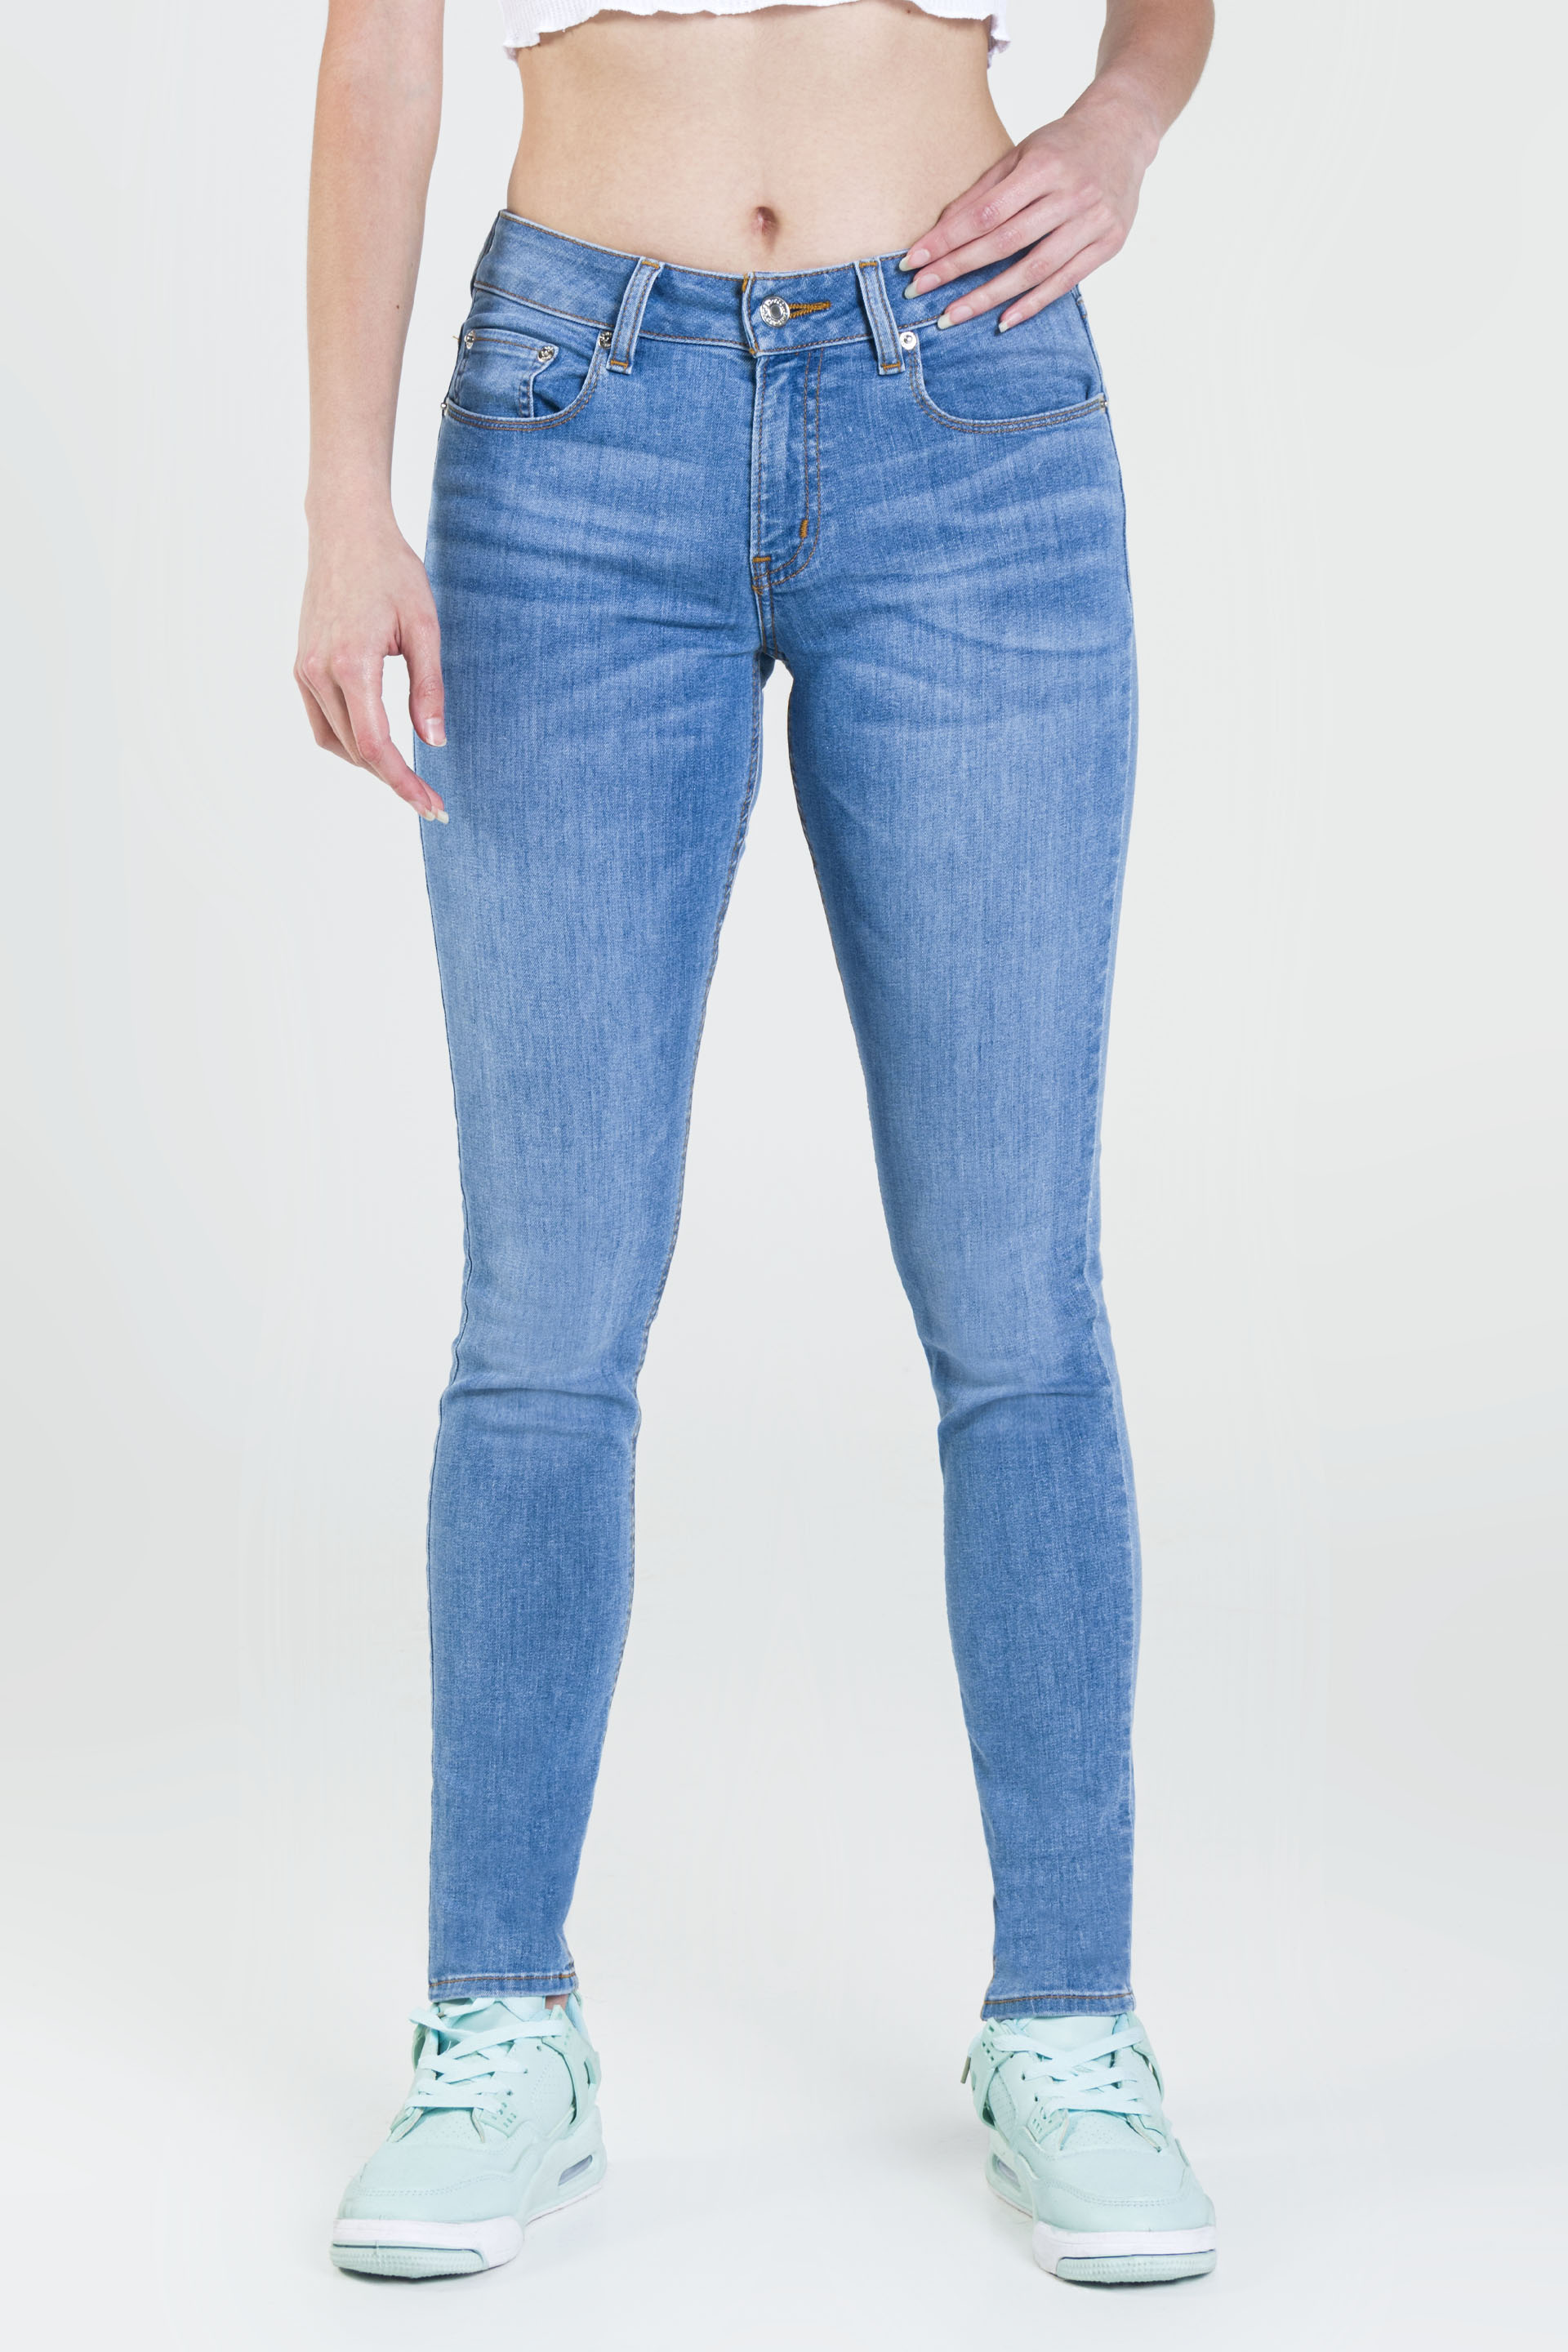 Jeans Súper Skinny Oggi - Lucy para Mujer Mezclilla Azul Claro 2222108